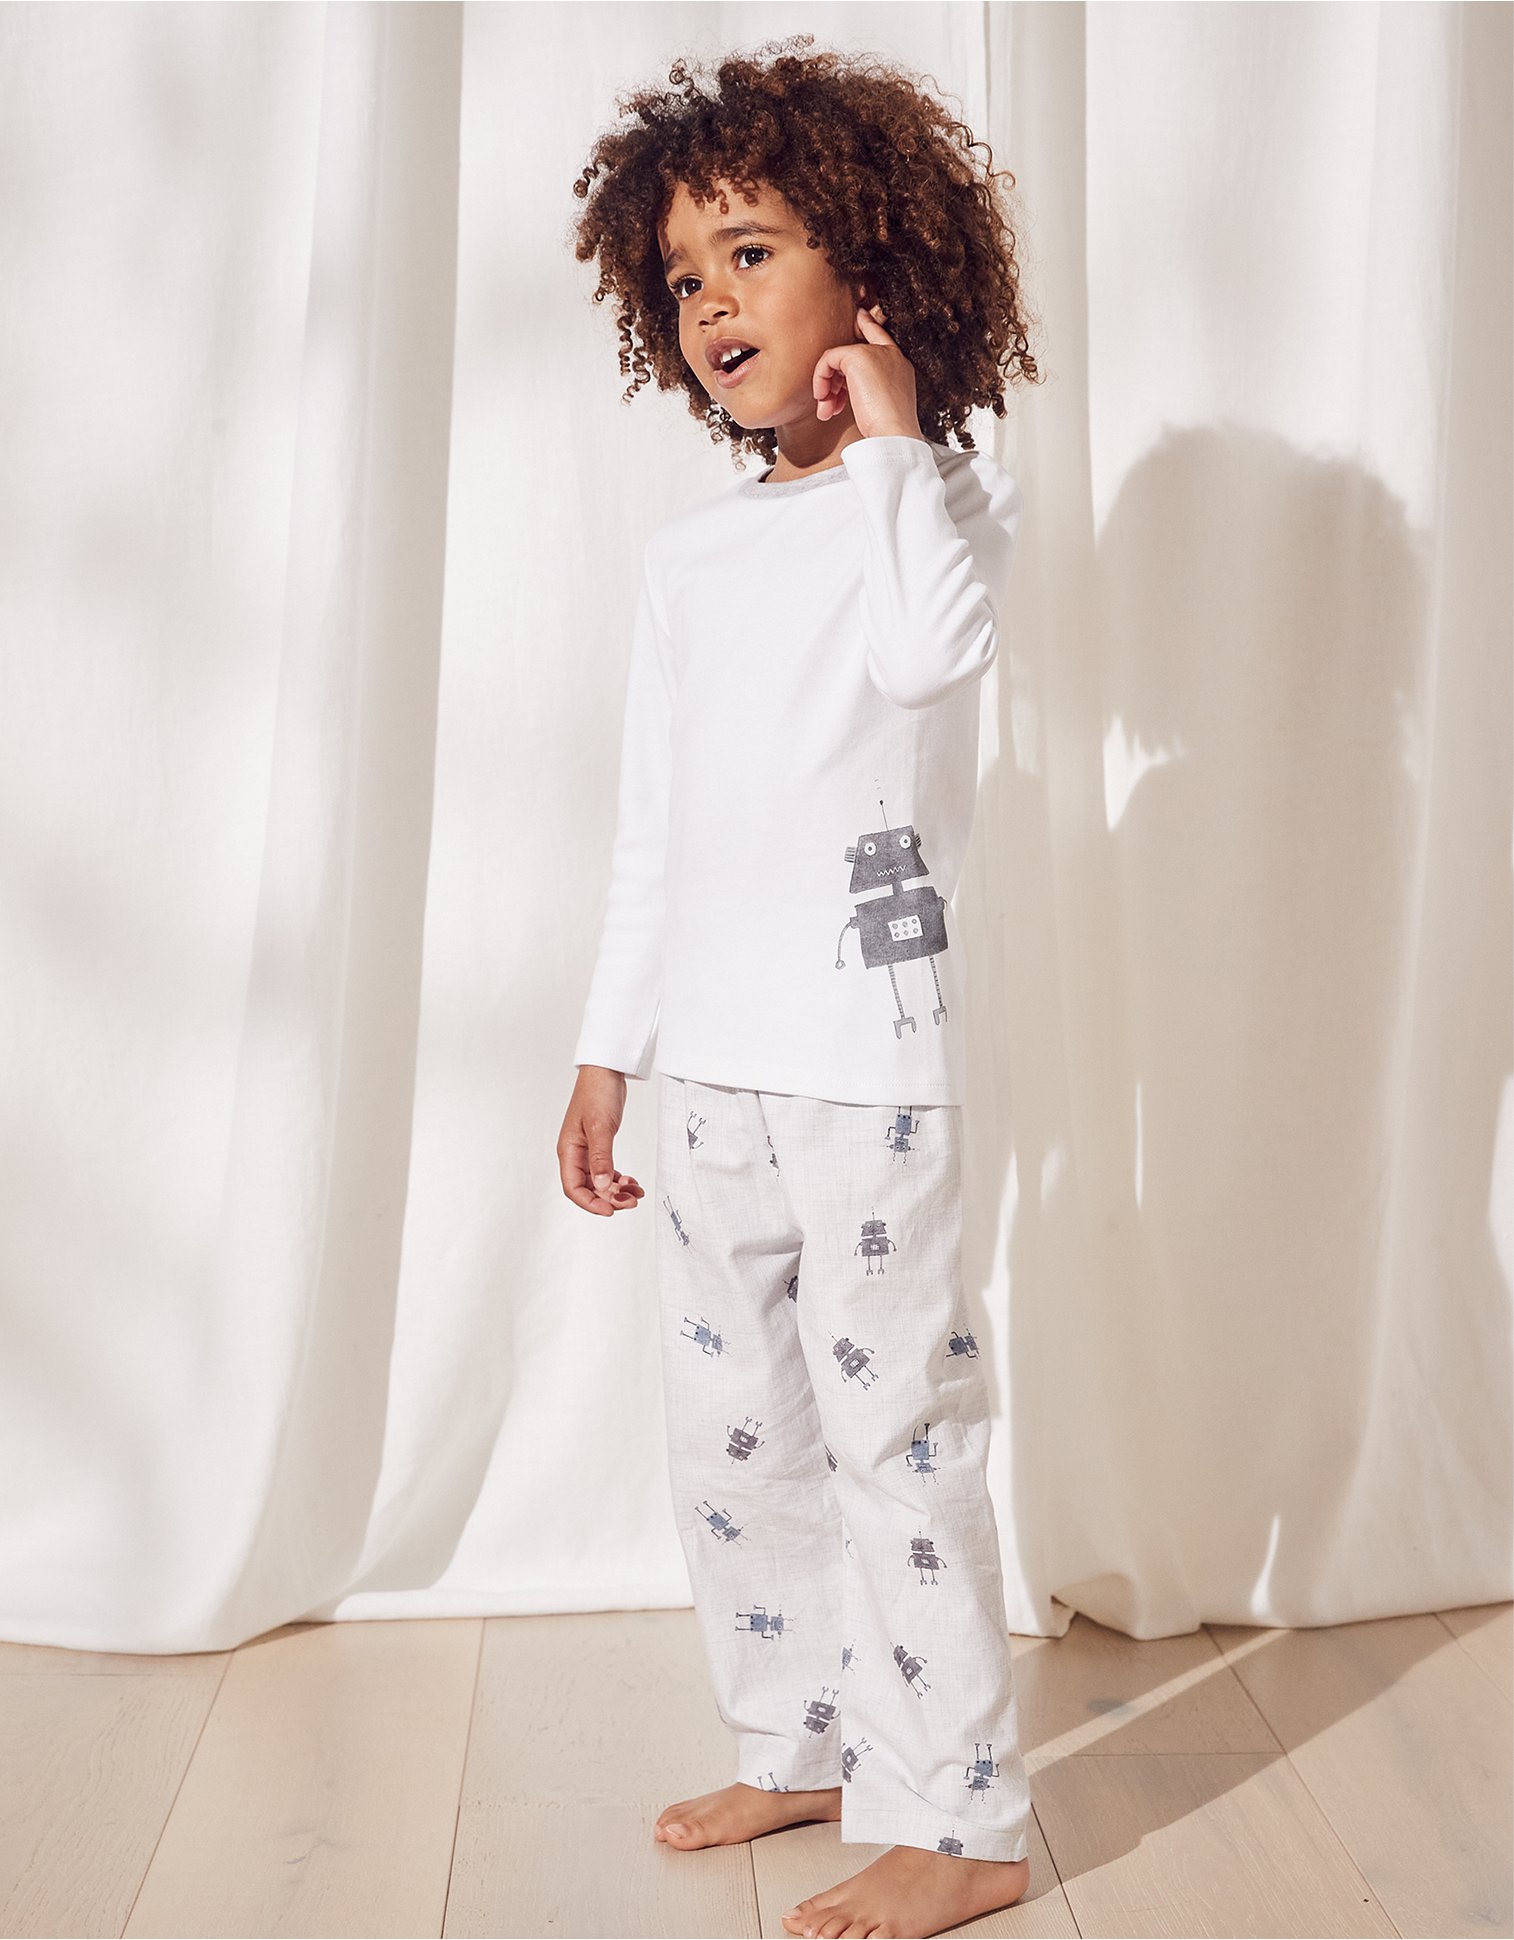 DAUGHTER QUEEN Girls Pajamas Set 100% Cotton Little Big Pjs Toddler Kids Sleepwear 